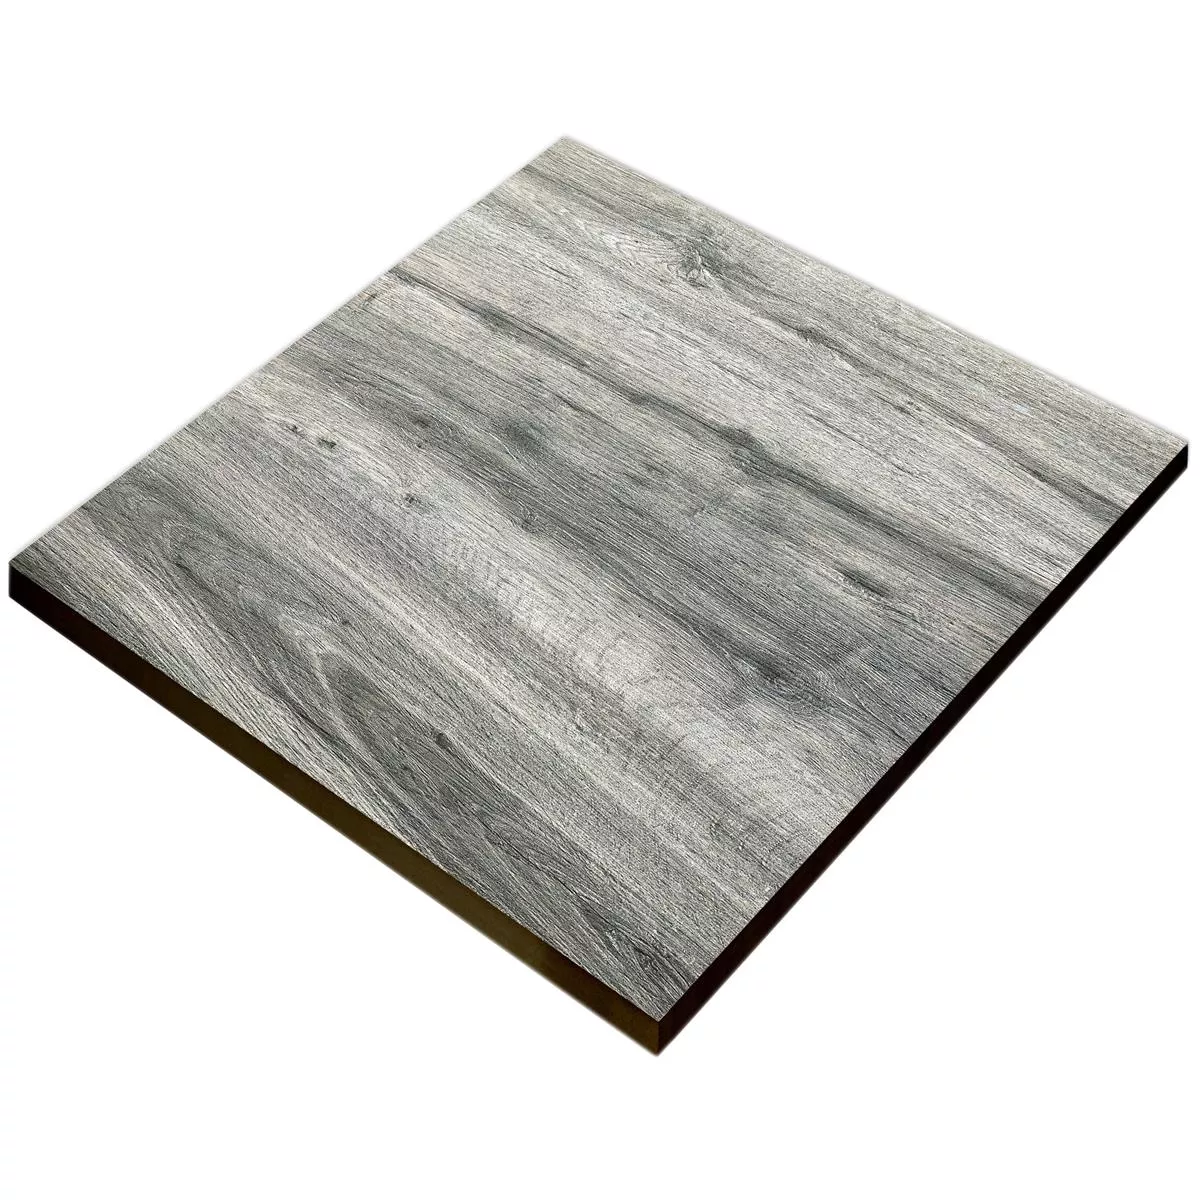 Dalles De Terrasse Starwood Imitation Bois Grey 60x60cm